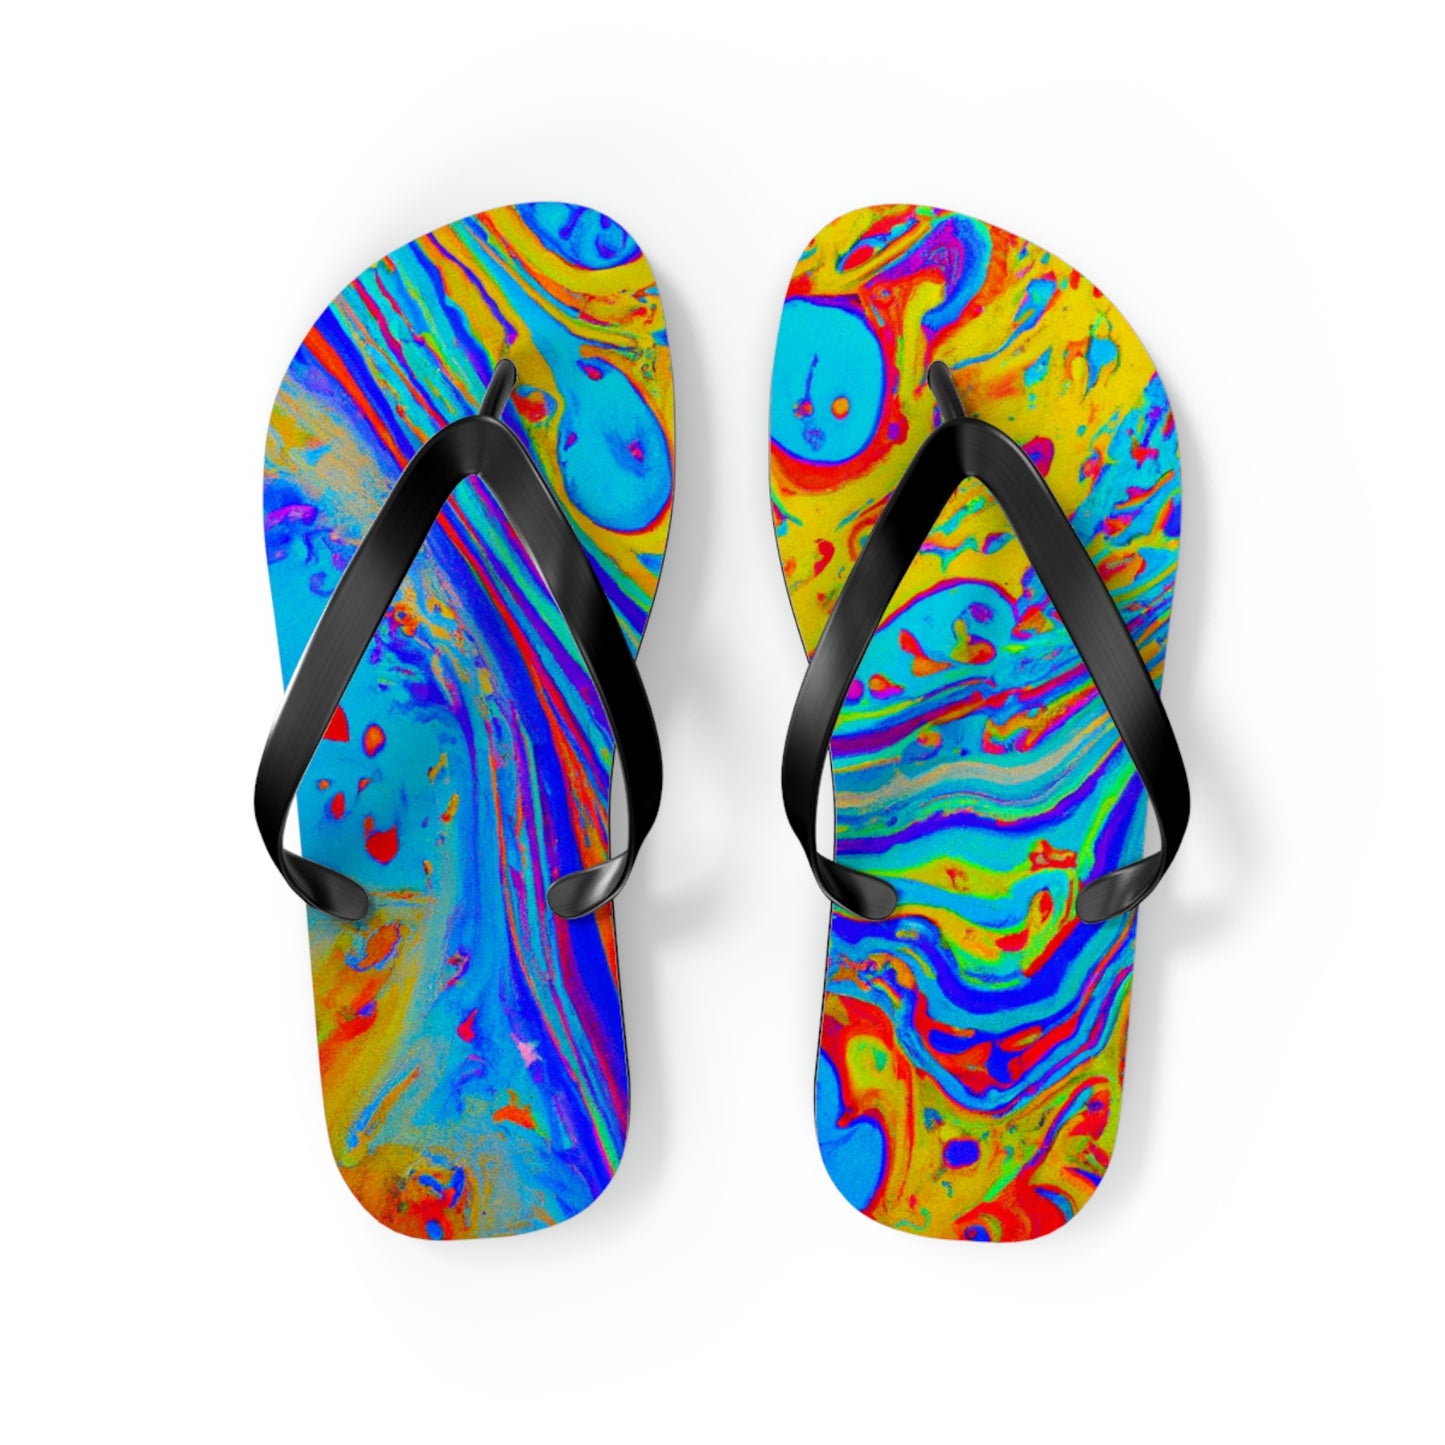 Splashy Flippers. - Sandals